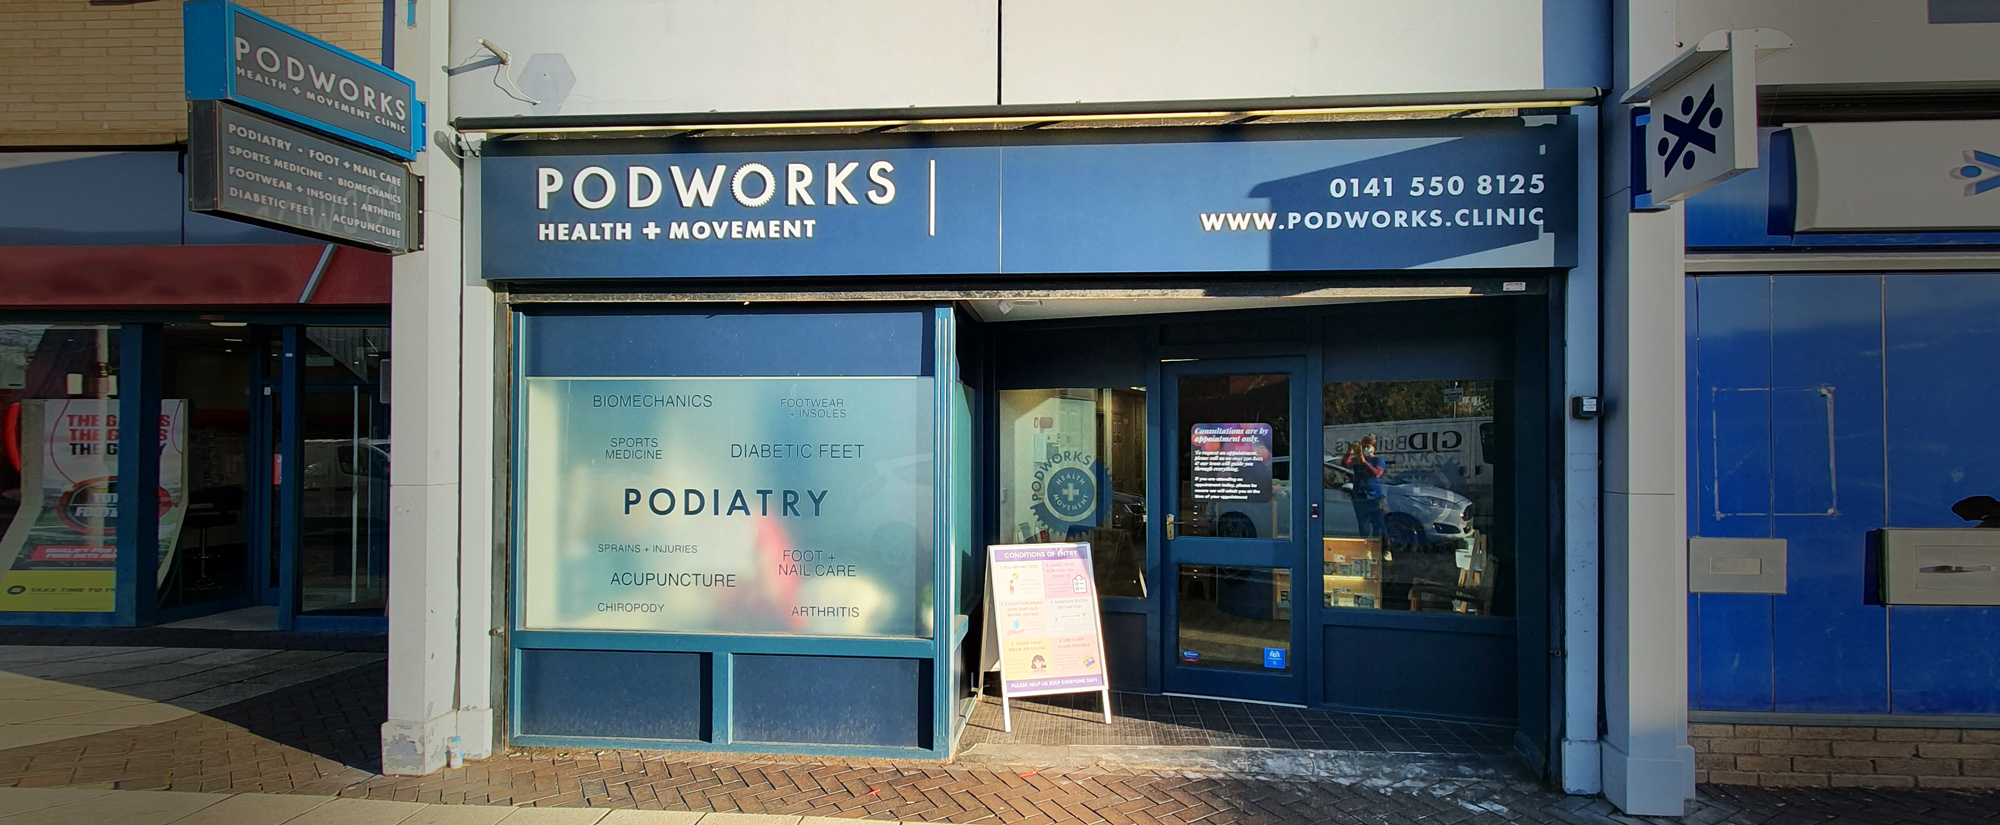 PodWorks Health & Movement Clinic Glasgow